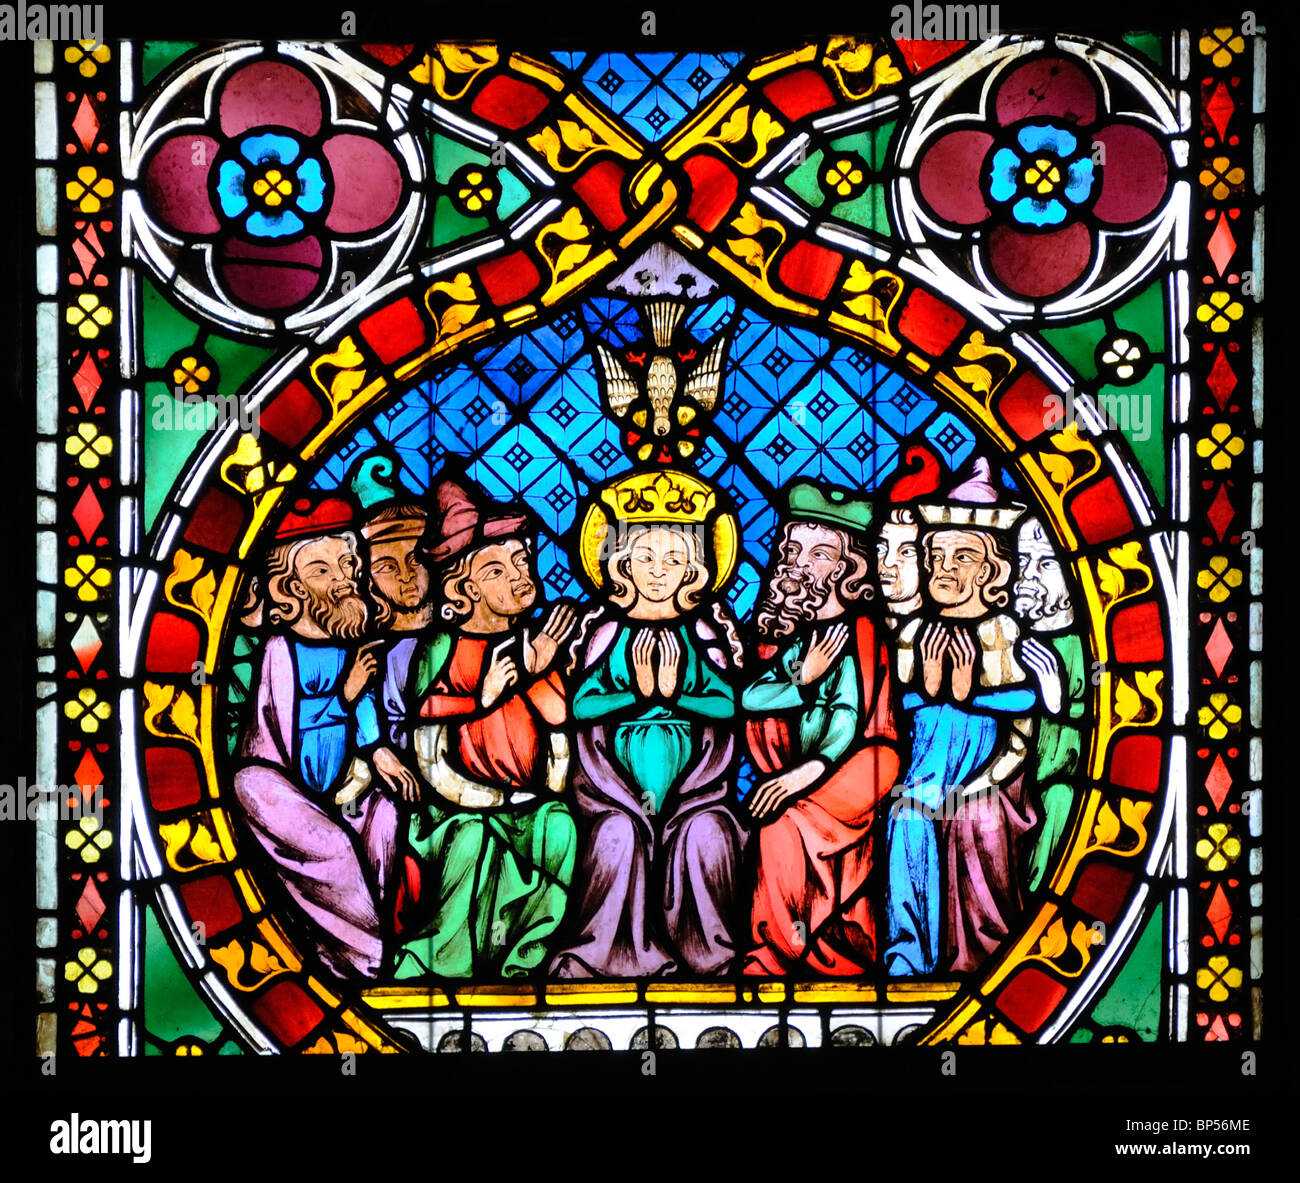 Freiburg im Breisgau, Germania. Munster Freiburg / Cattedrale di Friburgo. Finestra di vetro colorato Foto Stock